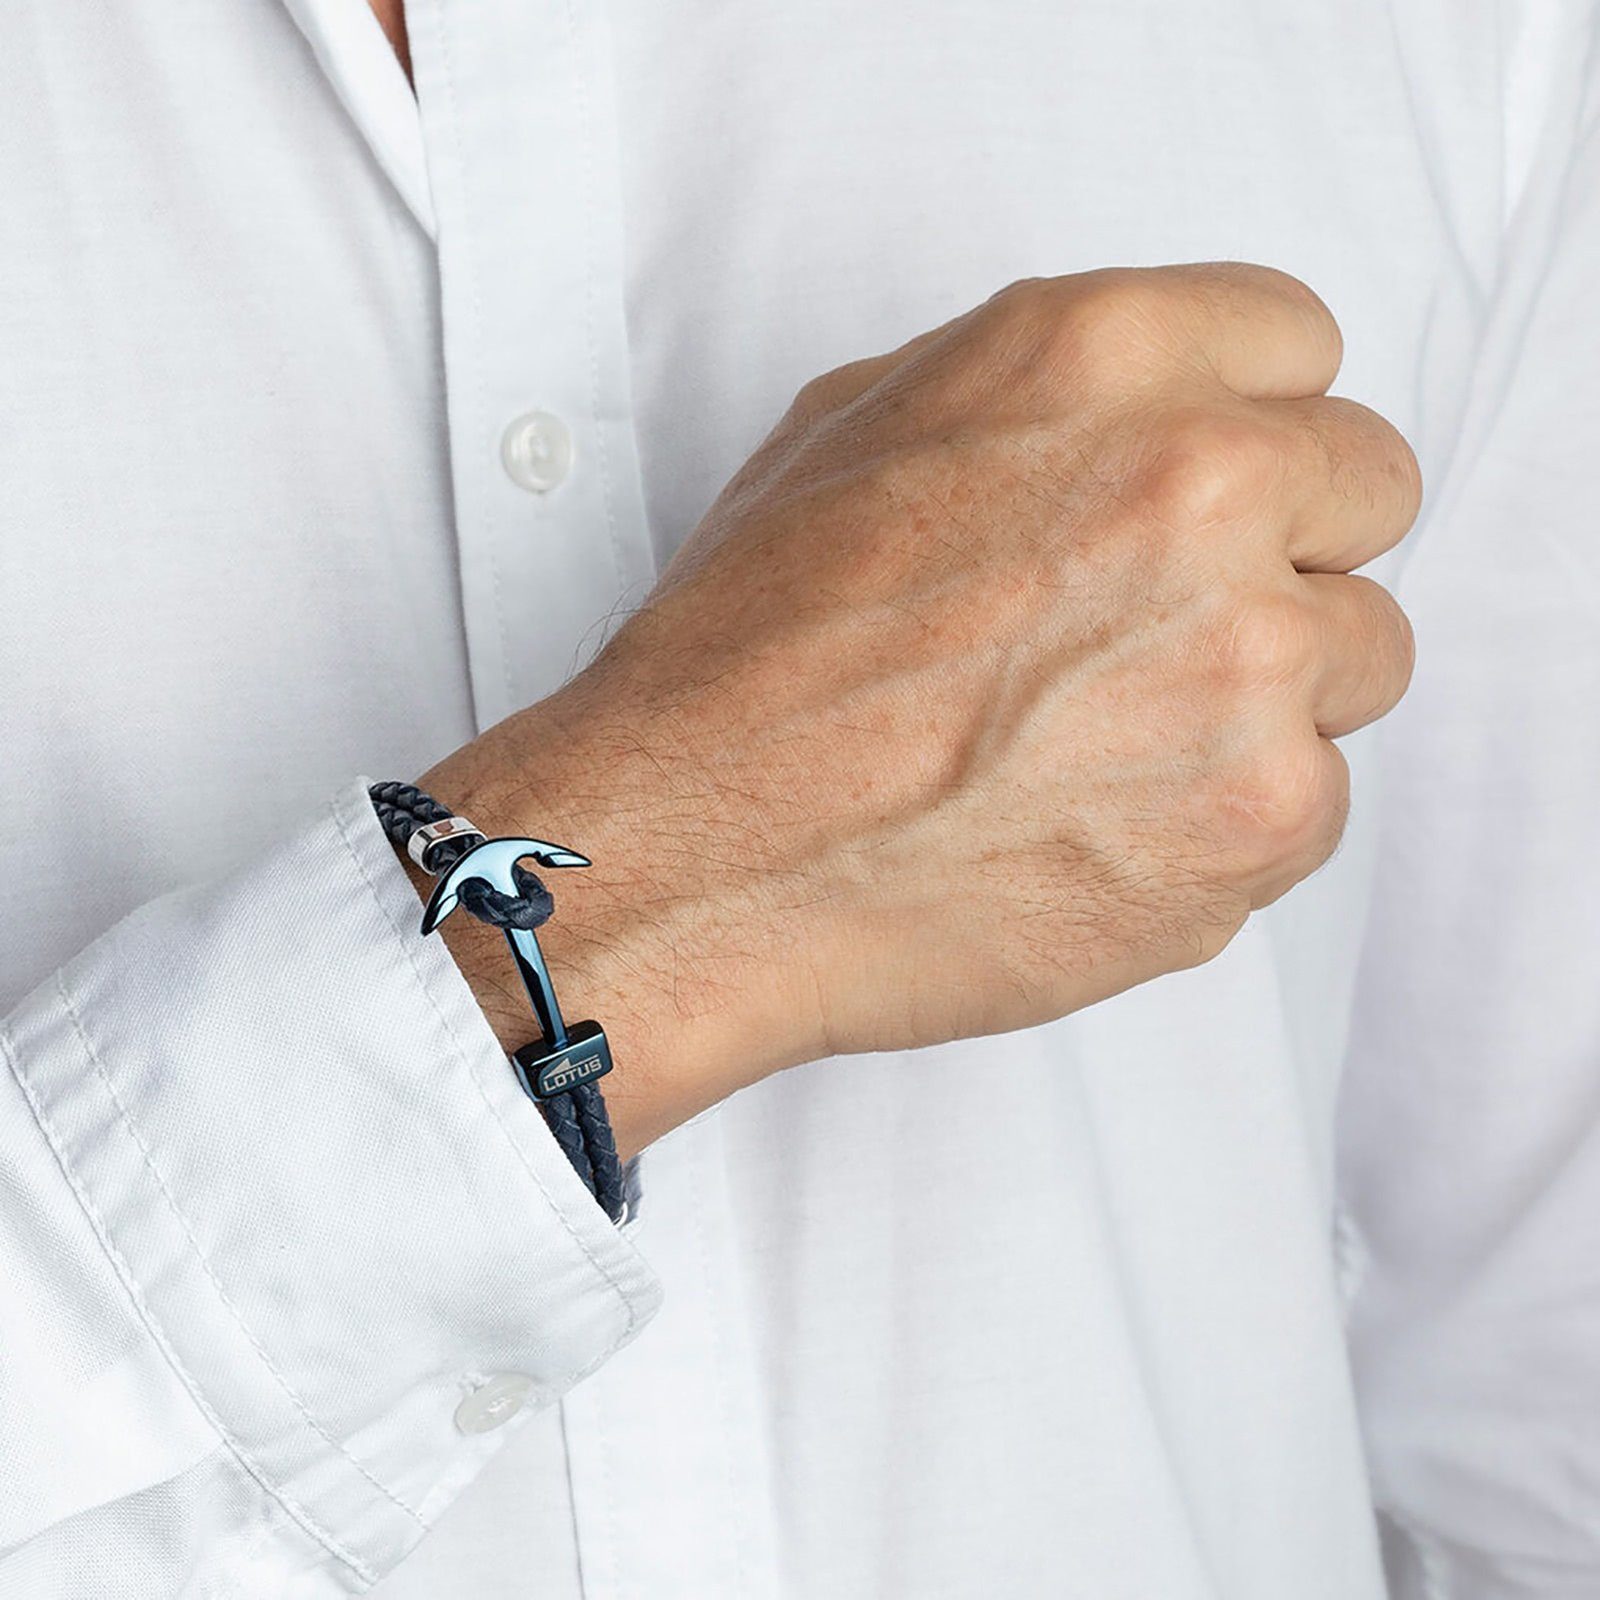 Edelstahl Armband aus für blau Lotus Steel), (Armband), Echtleder (Stainless Style Armband Lotus Urban Herren Anker Style